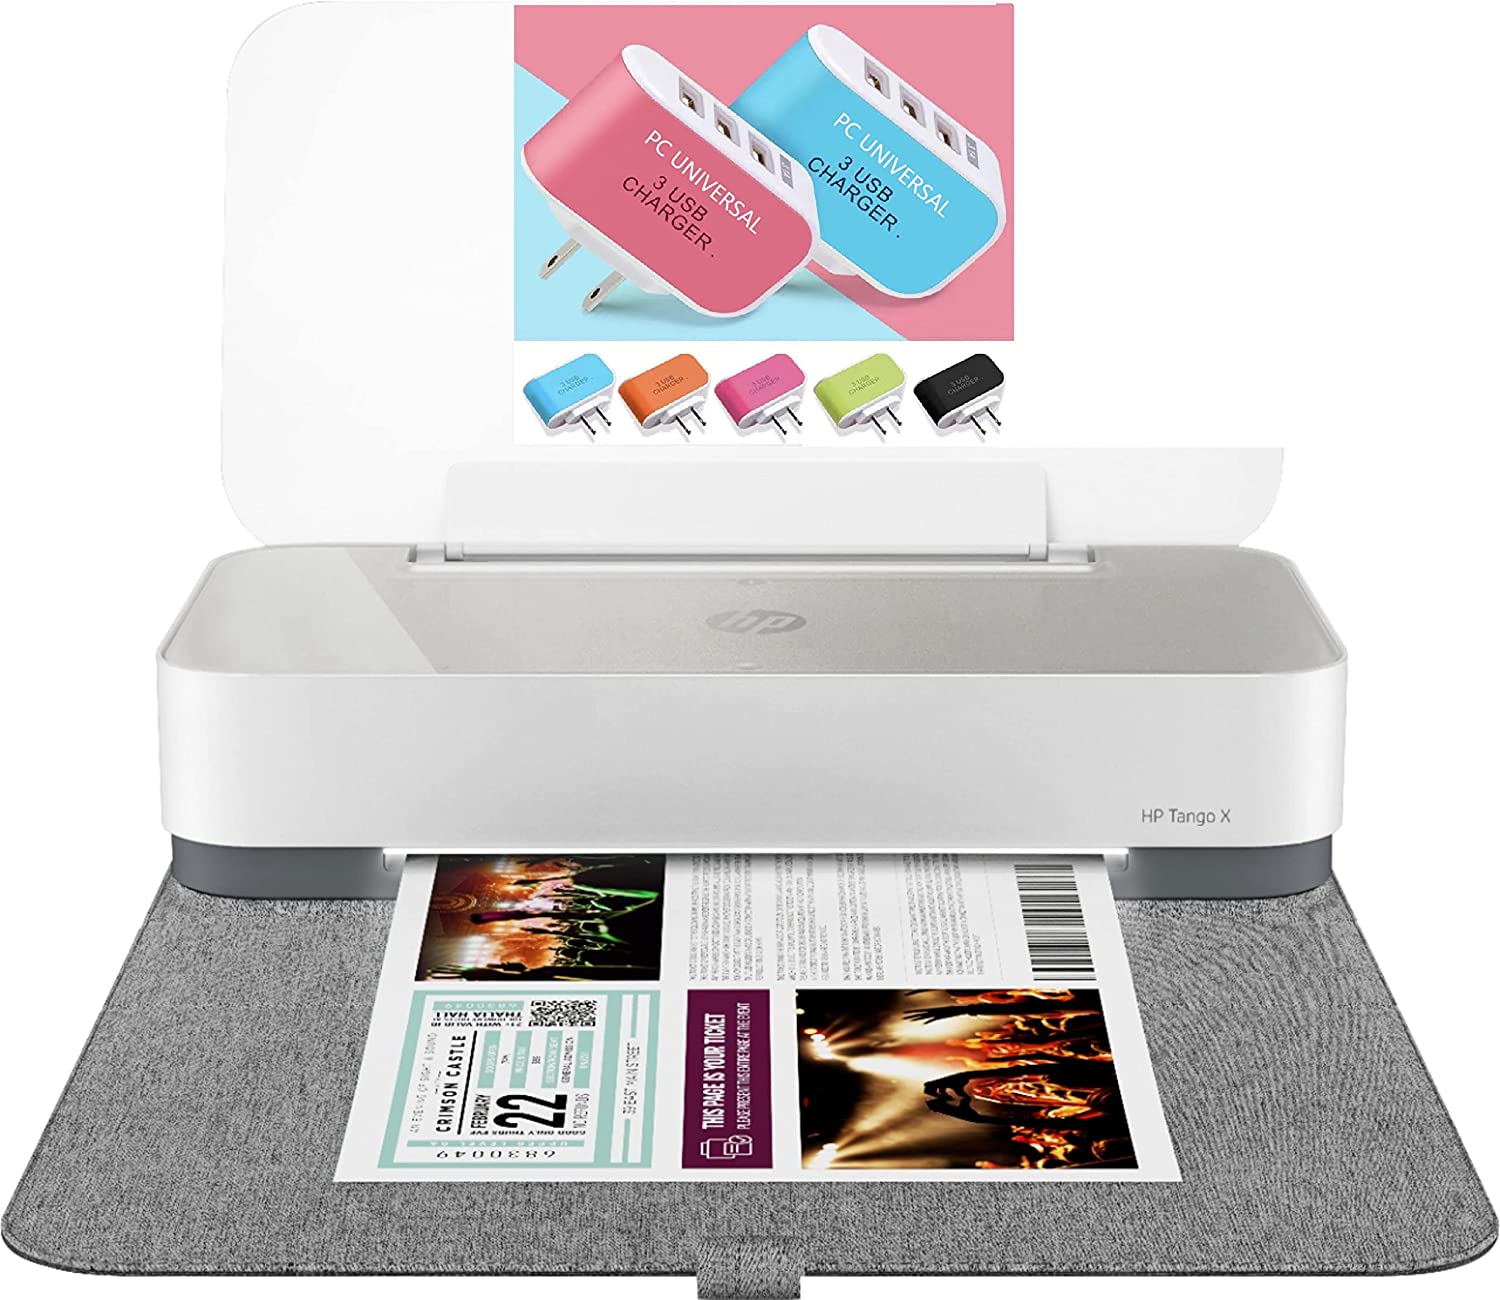 PC Universal Tango X Smart Wireless Printer with [...]